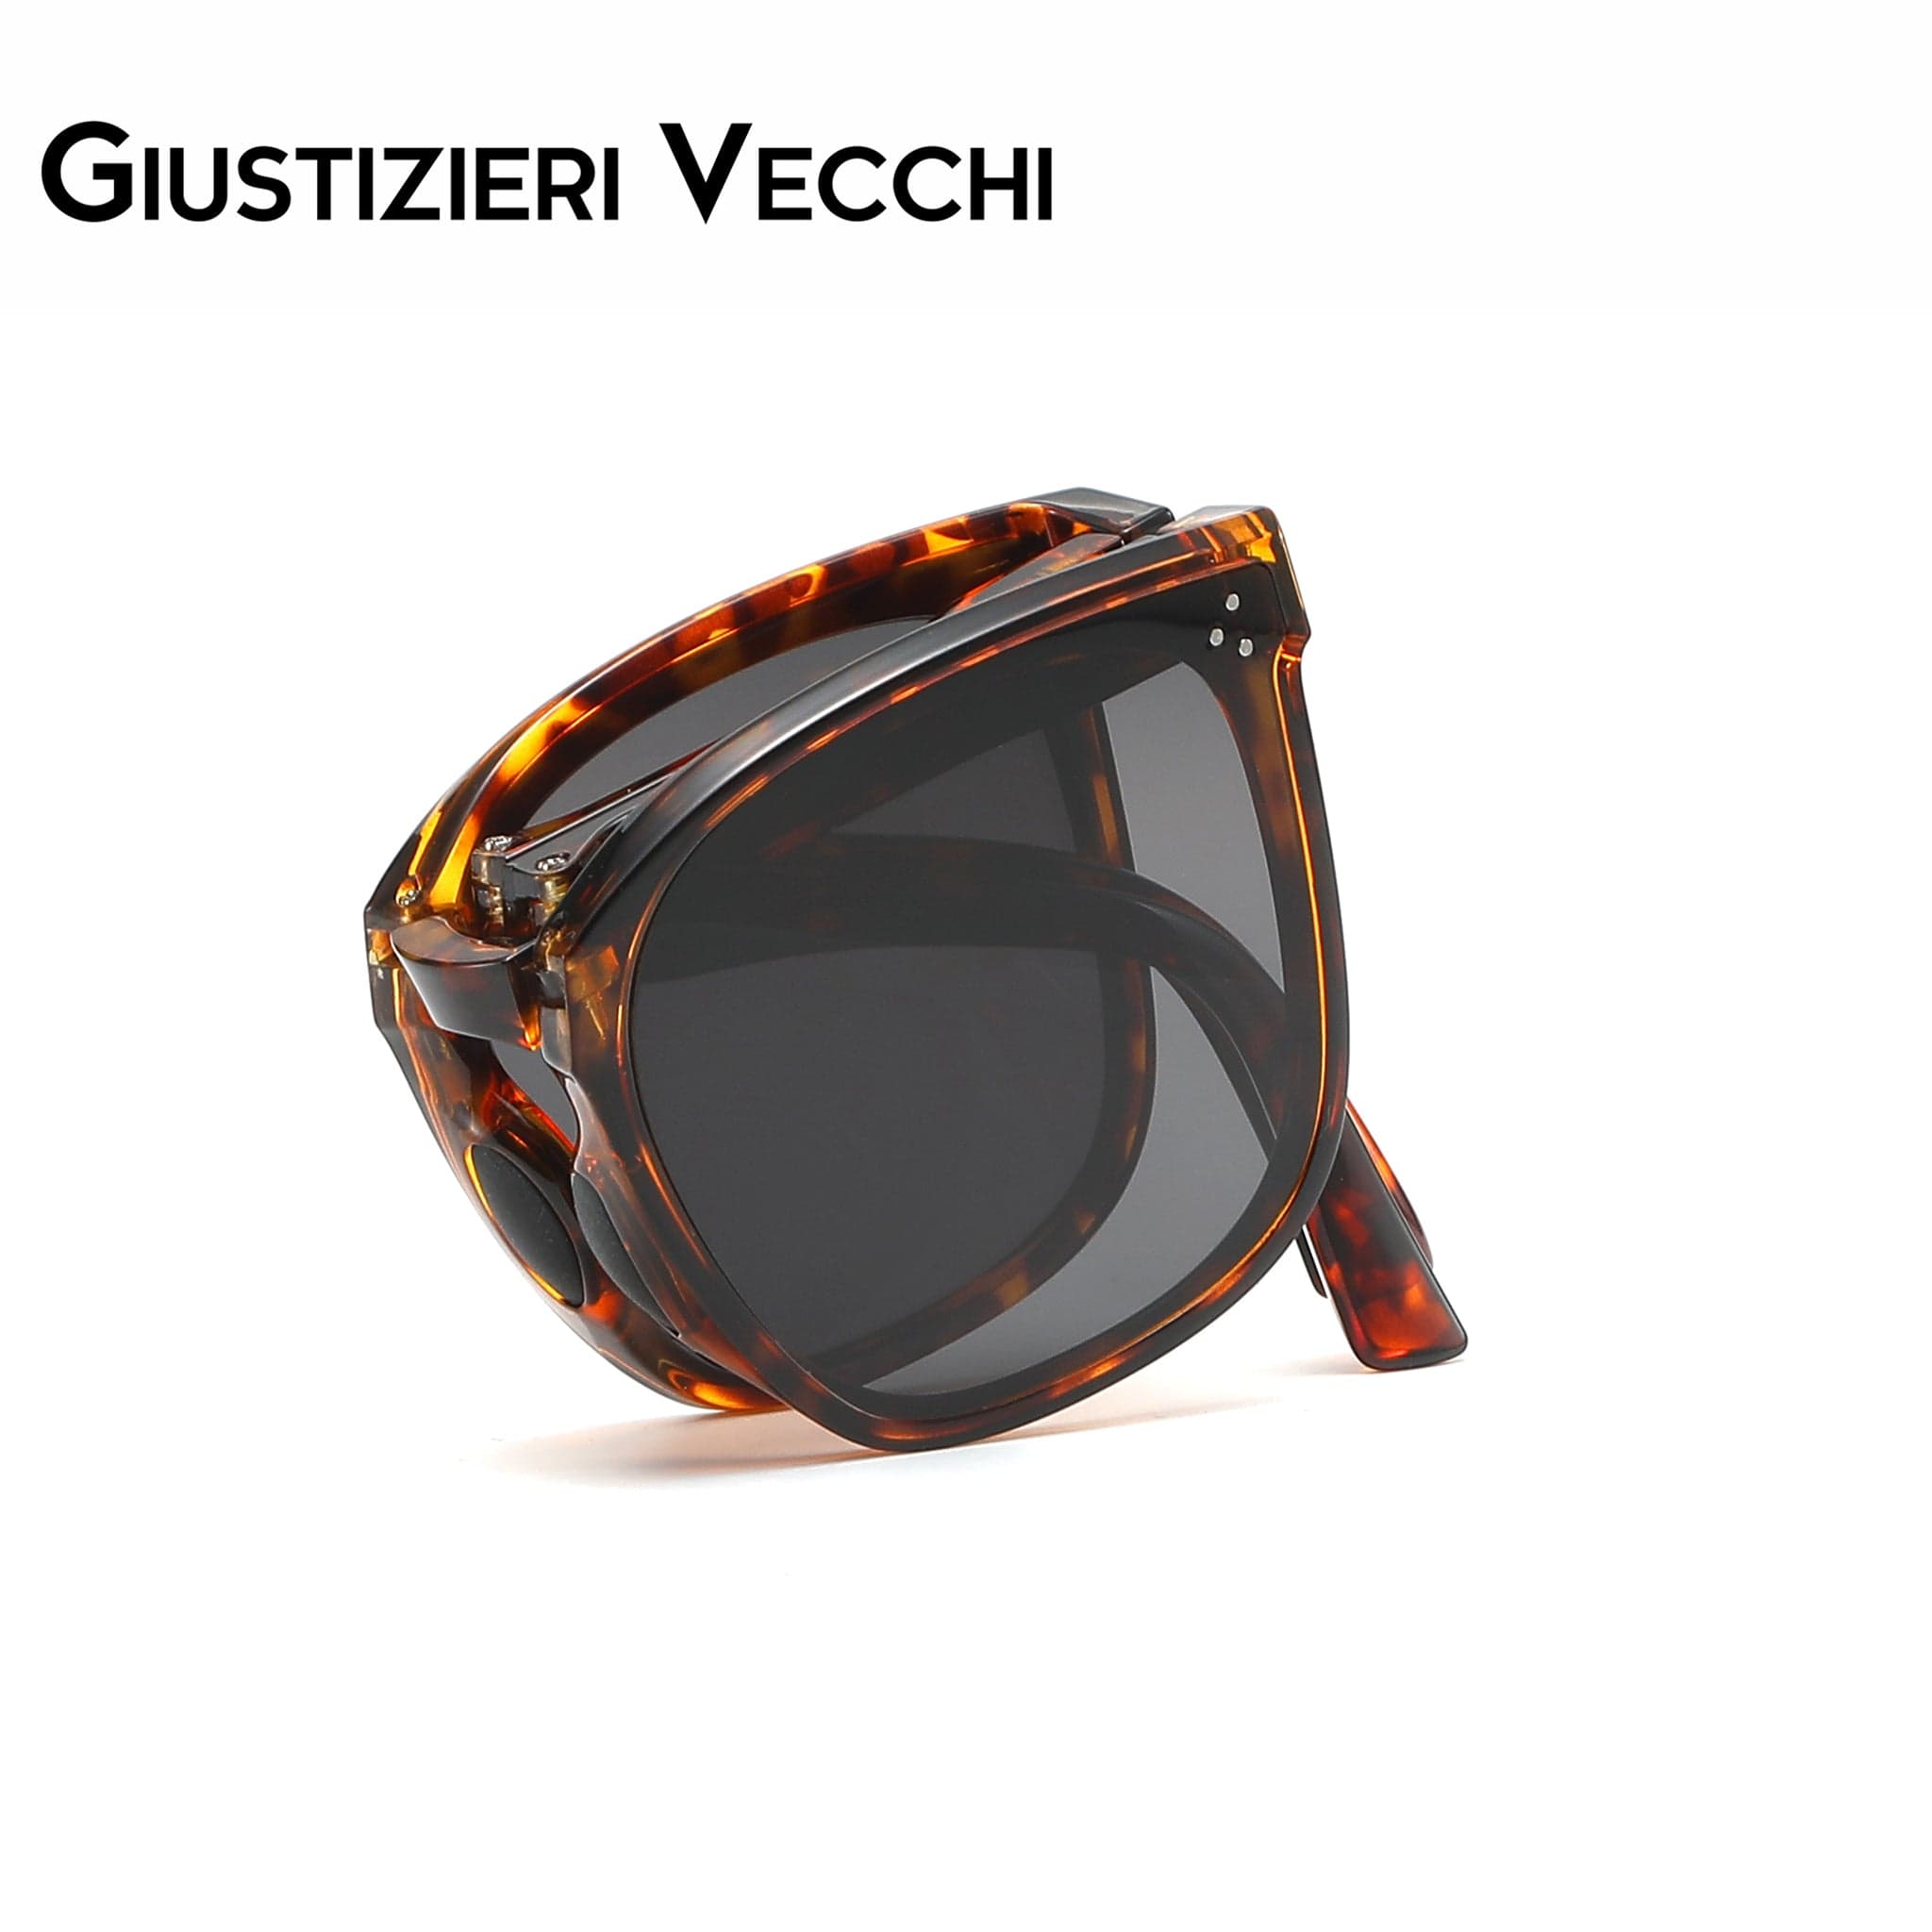 GIUSTIZIERI VECCHI Sunglasses Medium / Brown Tortoise Sassy Chic Sei